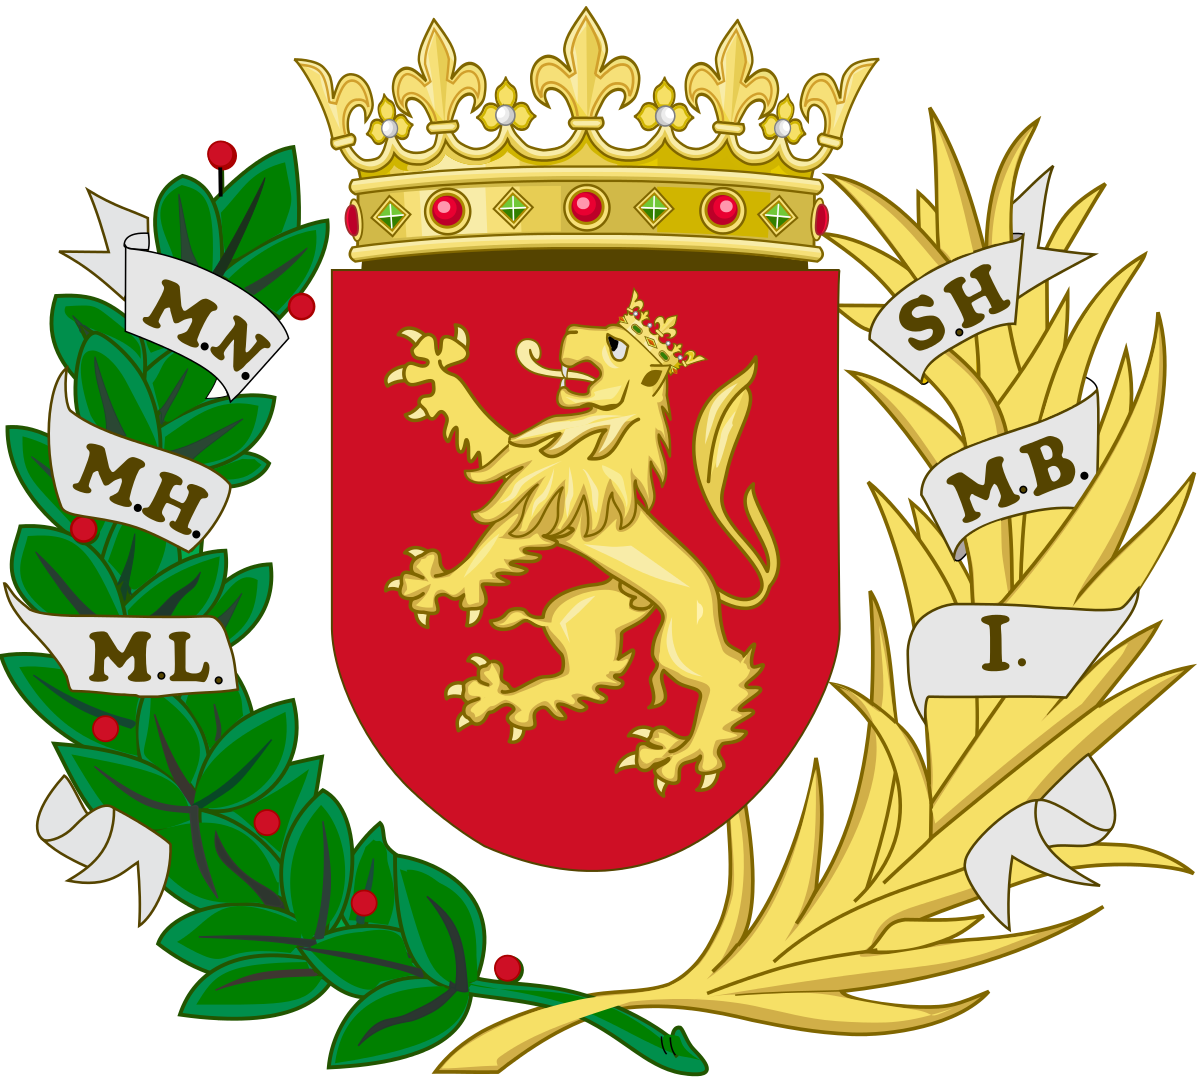 Zaragoza shield